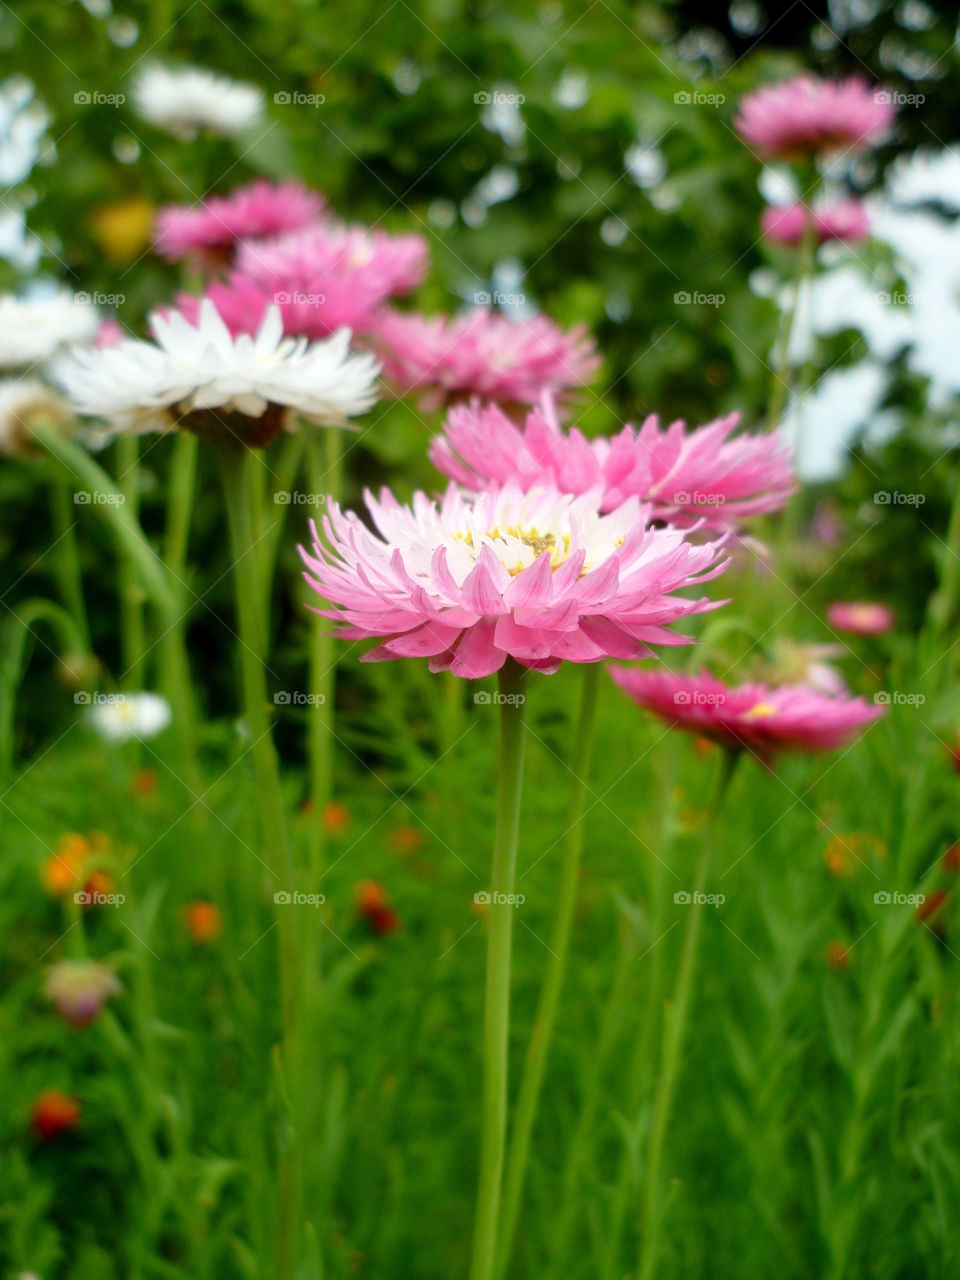 Growing pink flowers in the garden